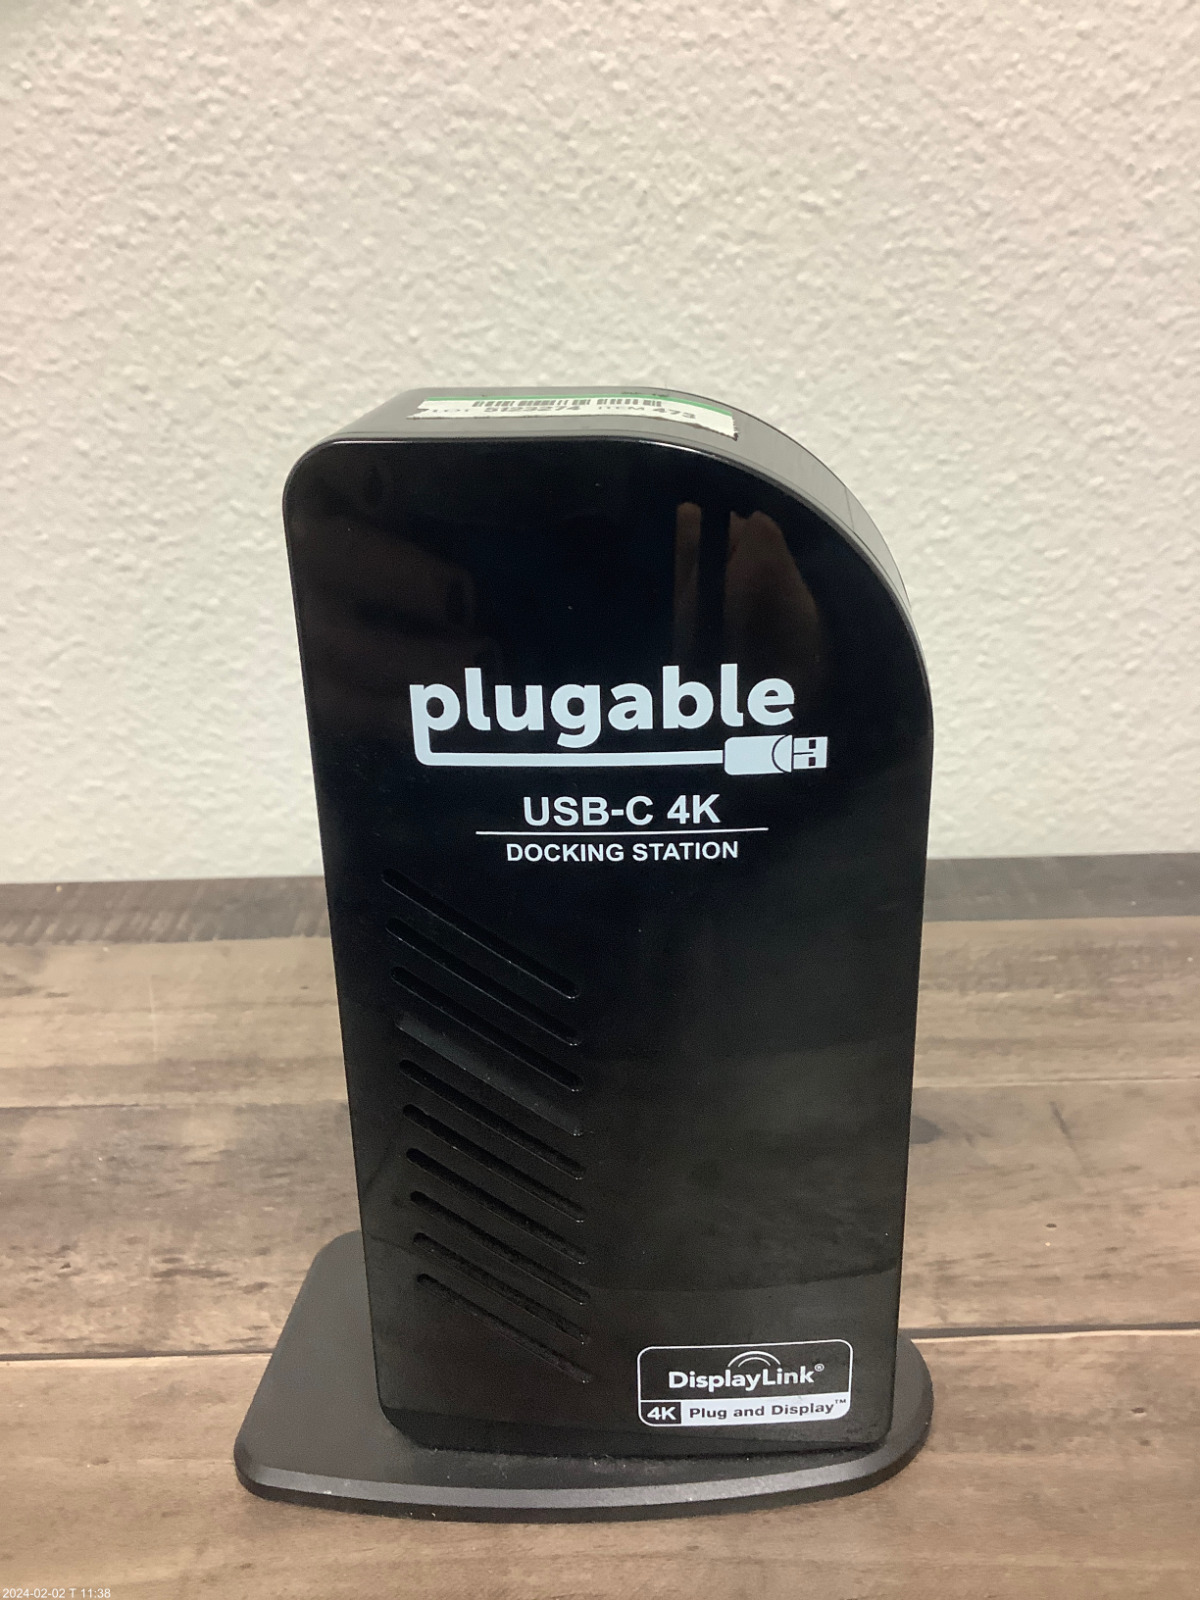 Plugable USB-C 4K DOCKING STATION DISPLAYLINK 4K Plug and Display UD-ULTC4K